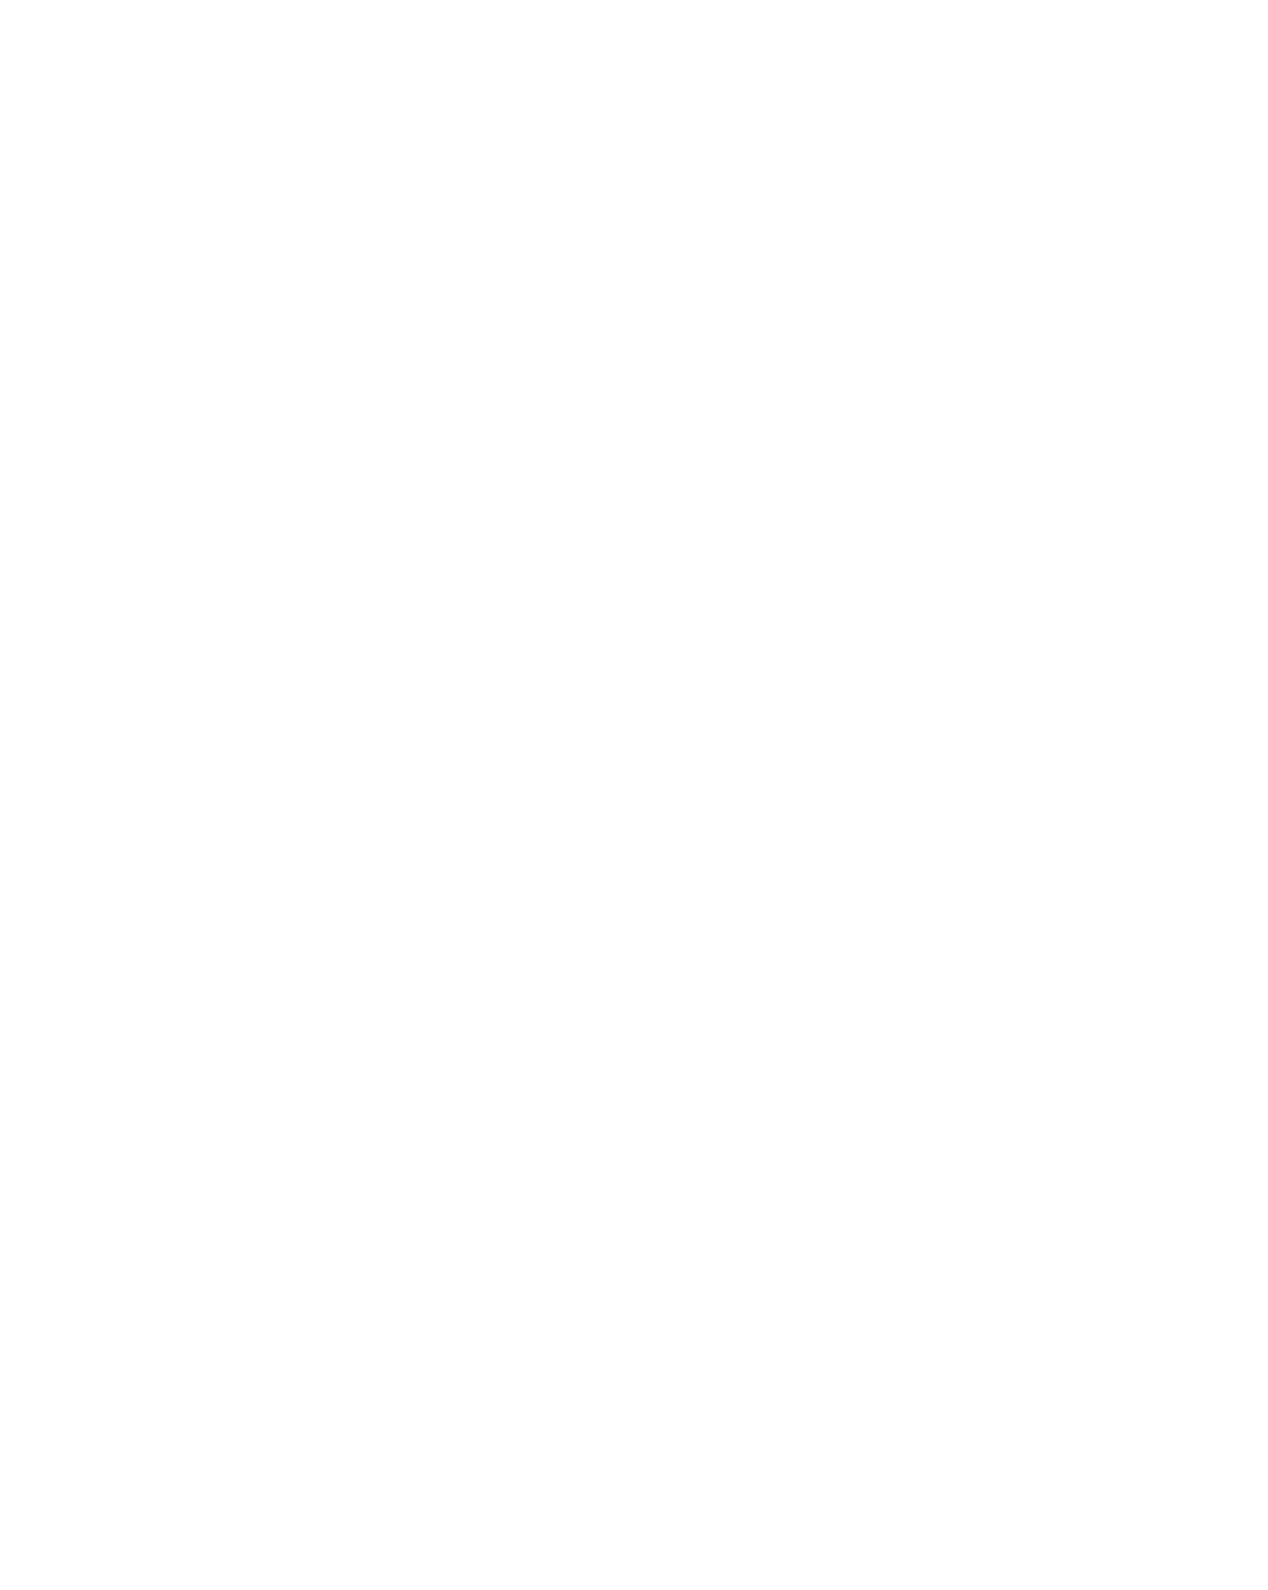 Ventas logo pour fonds sombres (PNG transparent)